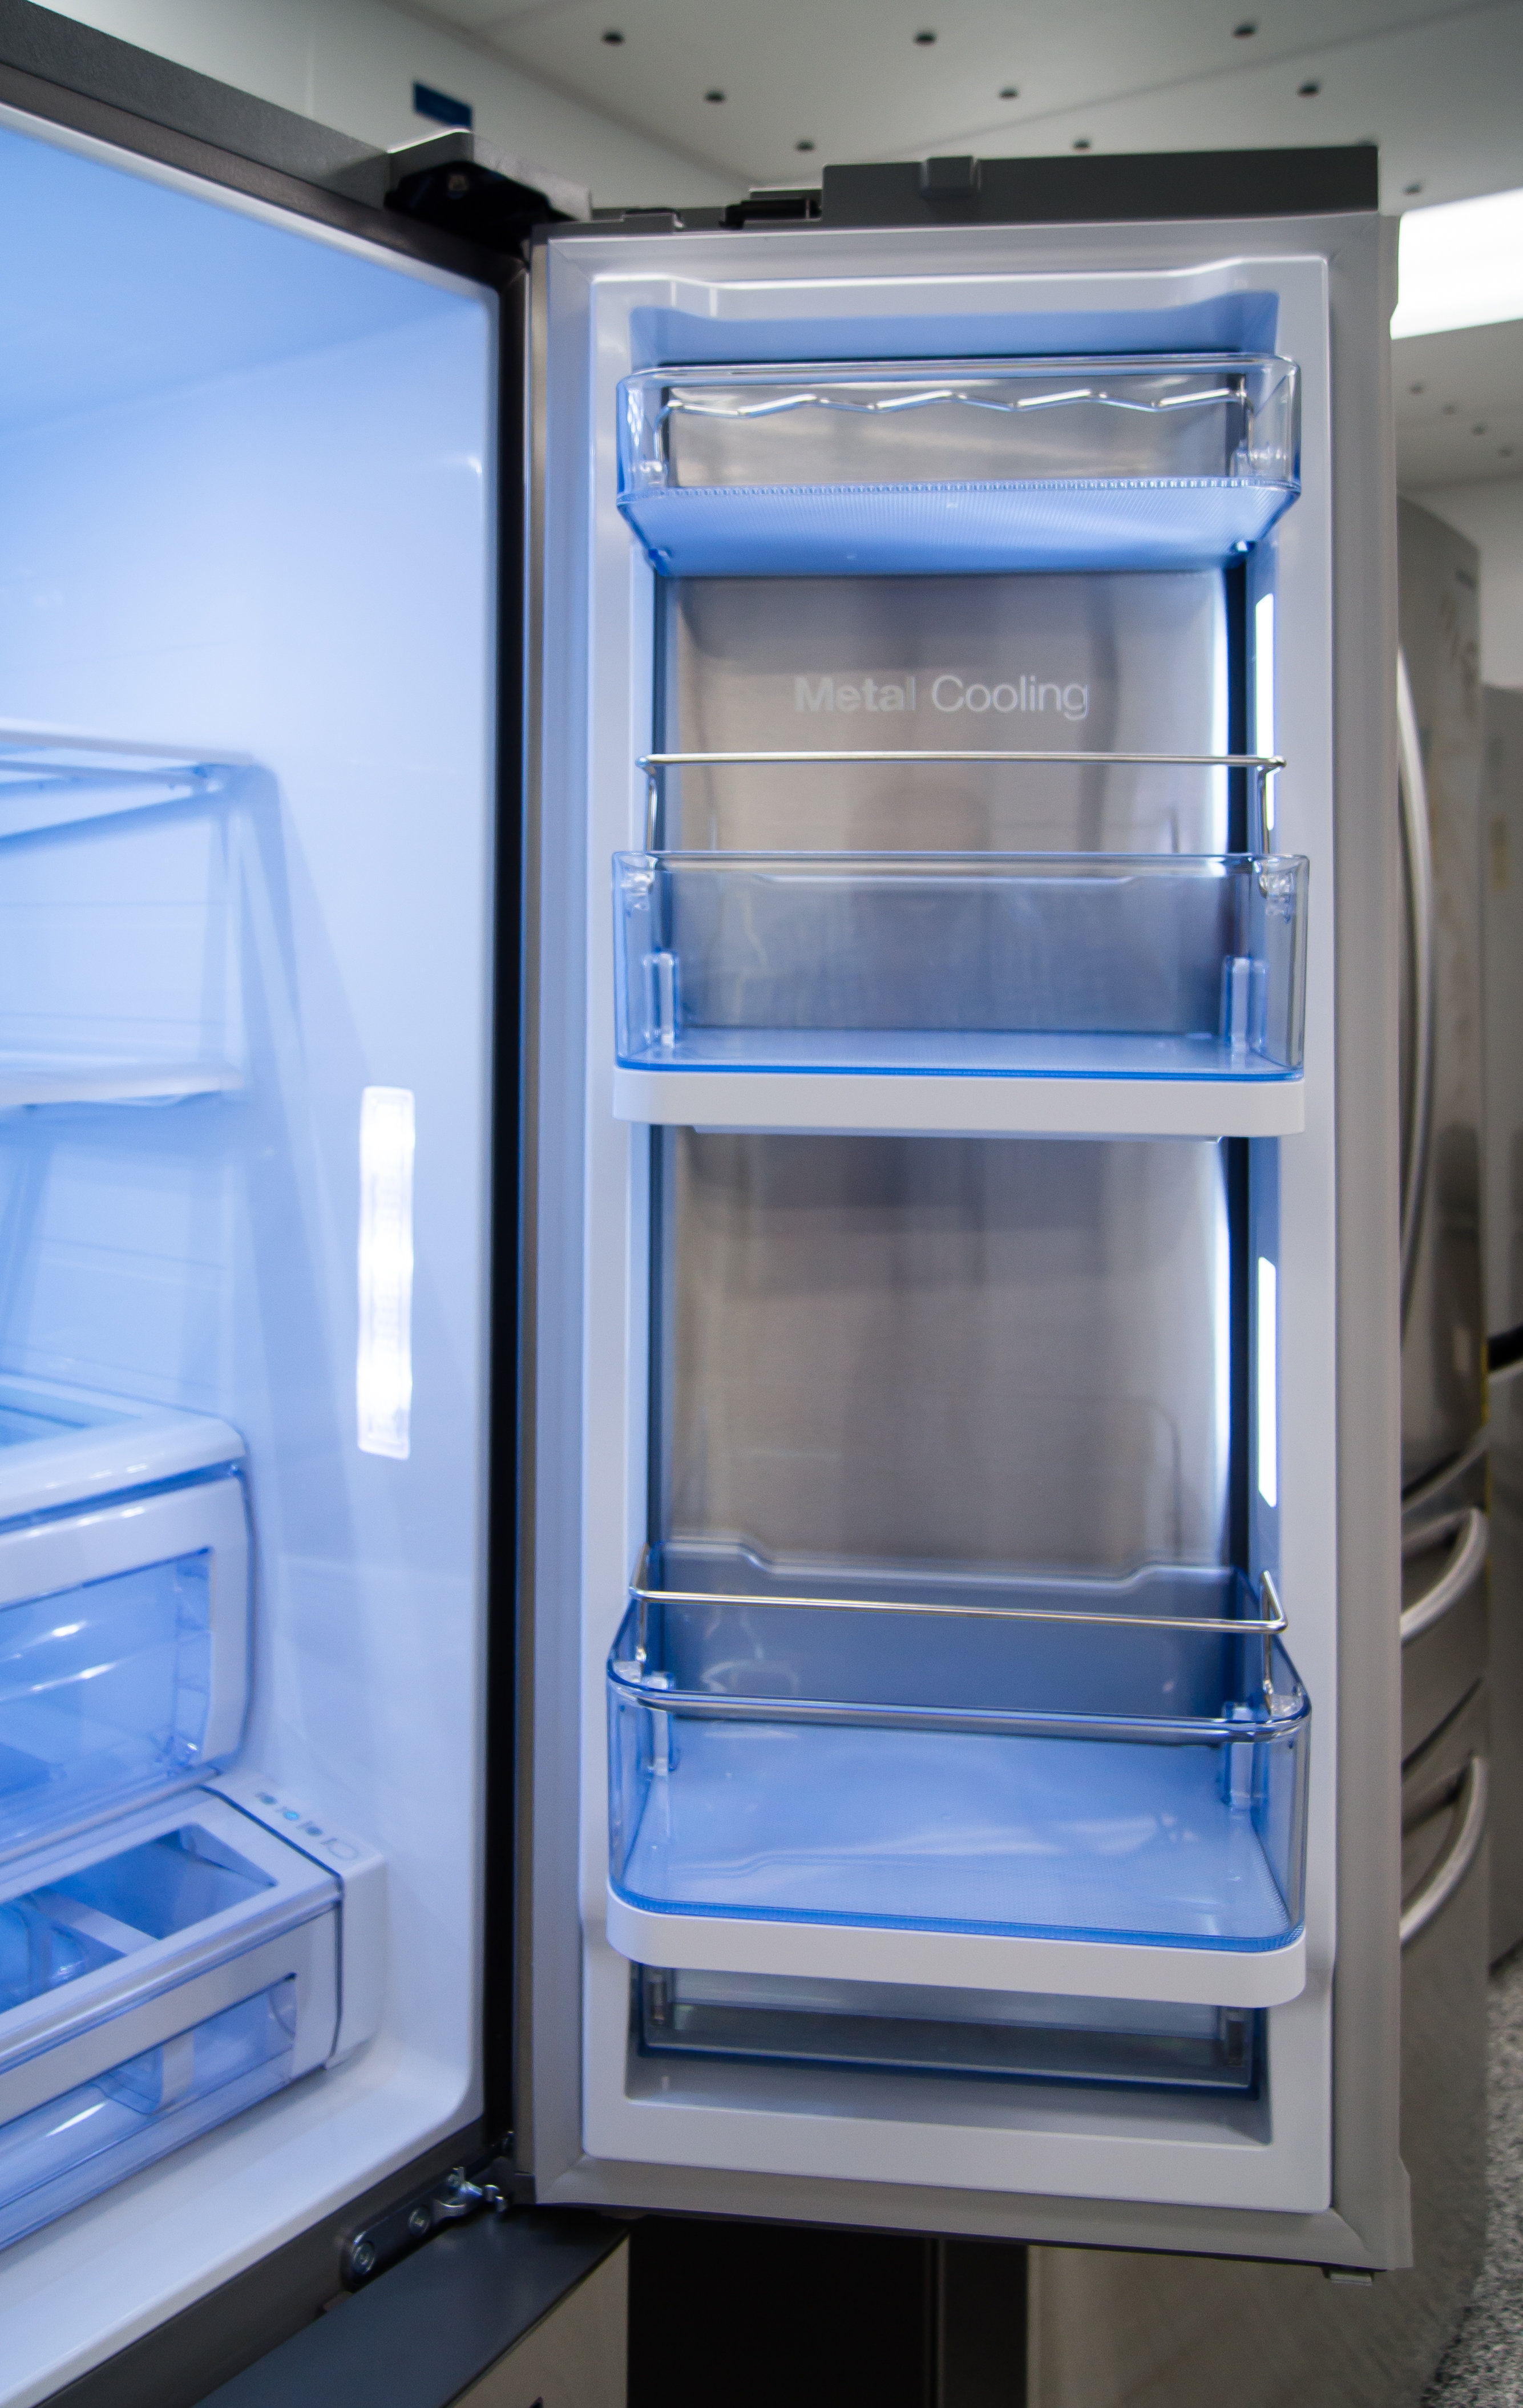 Samsung RF28HDEDBSR Refrigerator Review - Reviewed.com Refrigerators